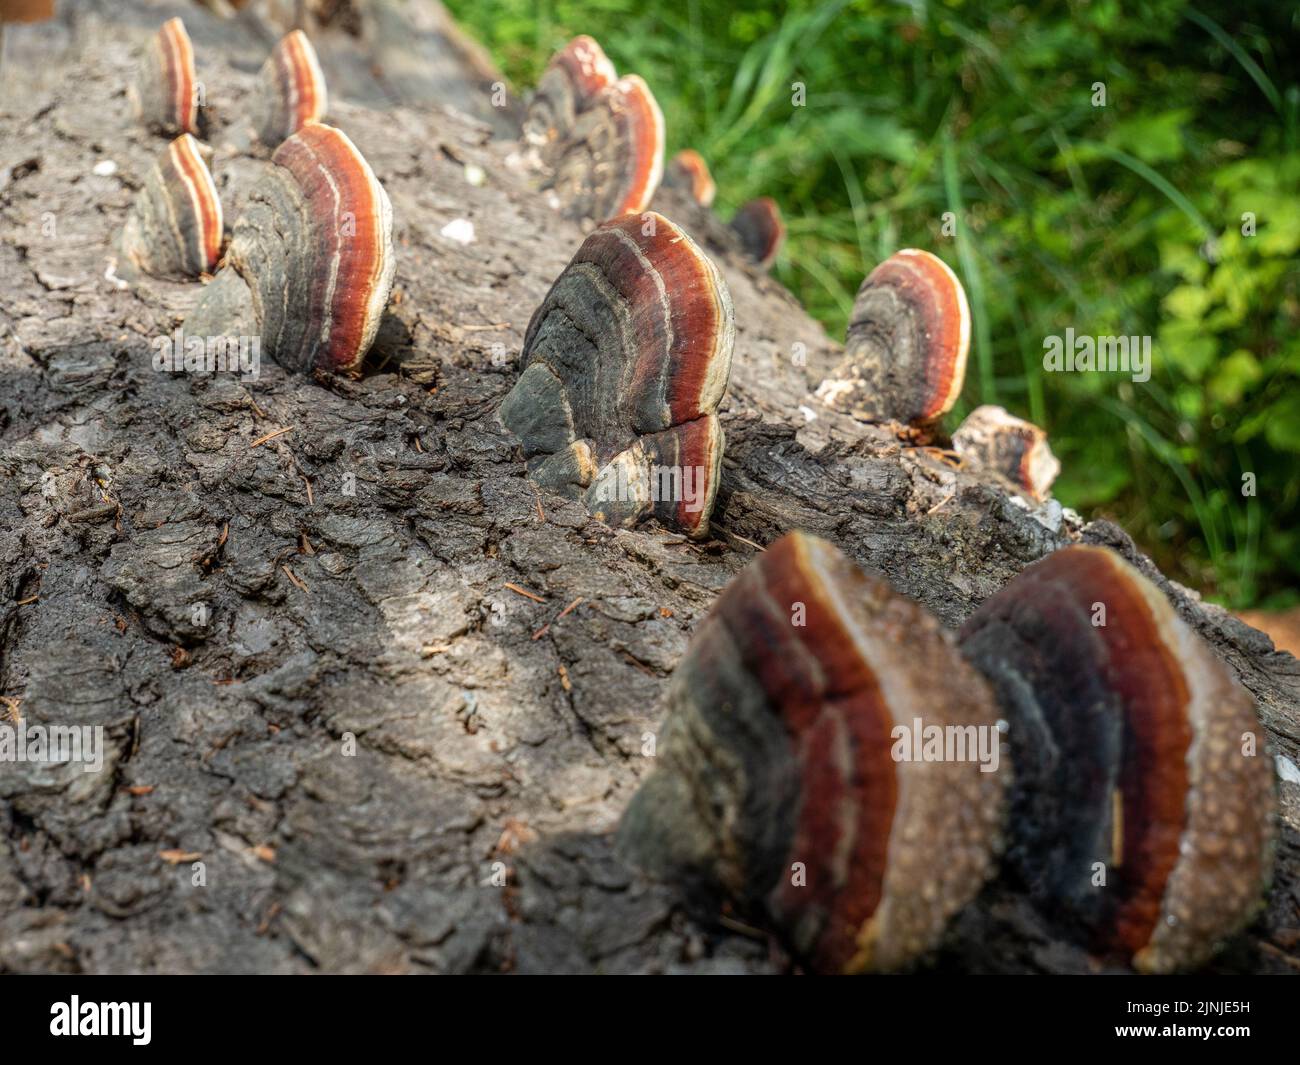 mushrooms on a fallen log Stock Photo